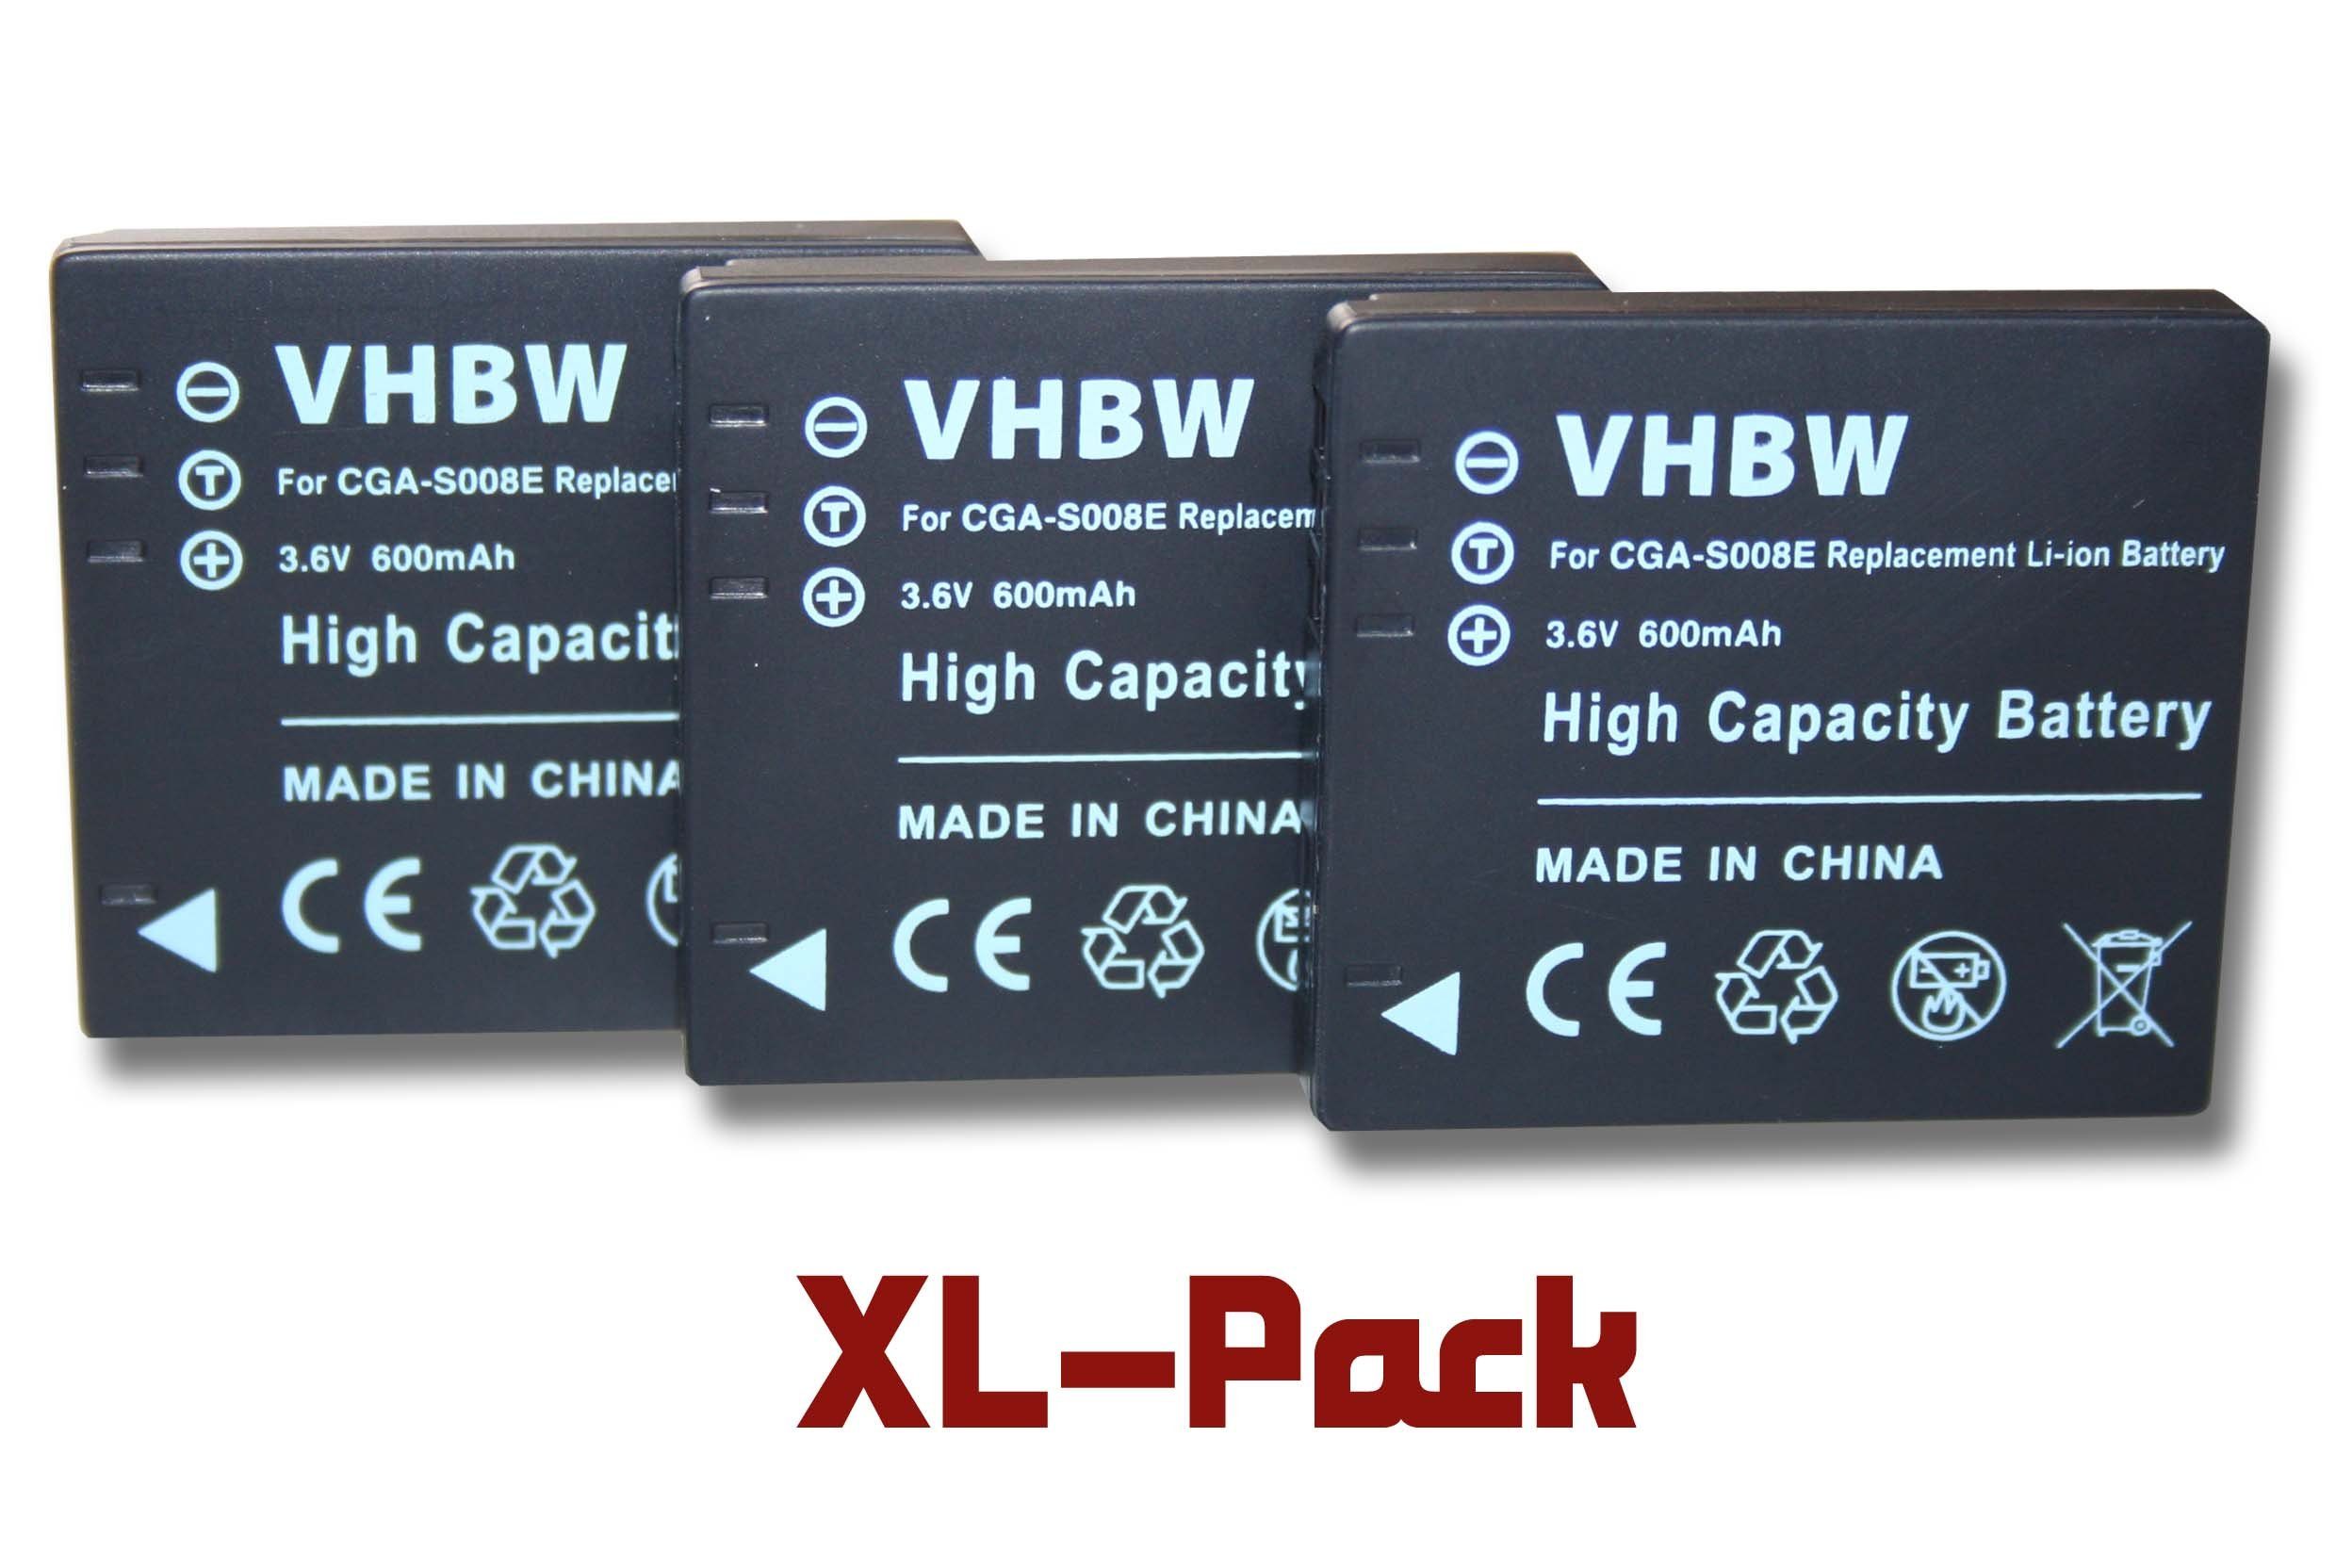 Li-Ion) SDR-SW20EG-K, mAh Kamera Kompakt SDR-SW21 Panasonic vhbw passend Foto Kamera-Akku für SDR-SW20EG-S, (600mAh, 3,6V, 600 /